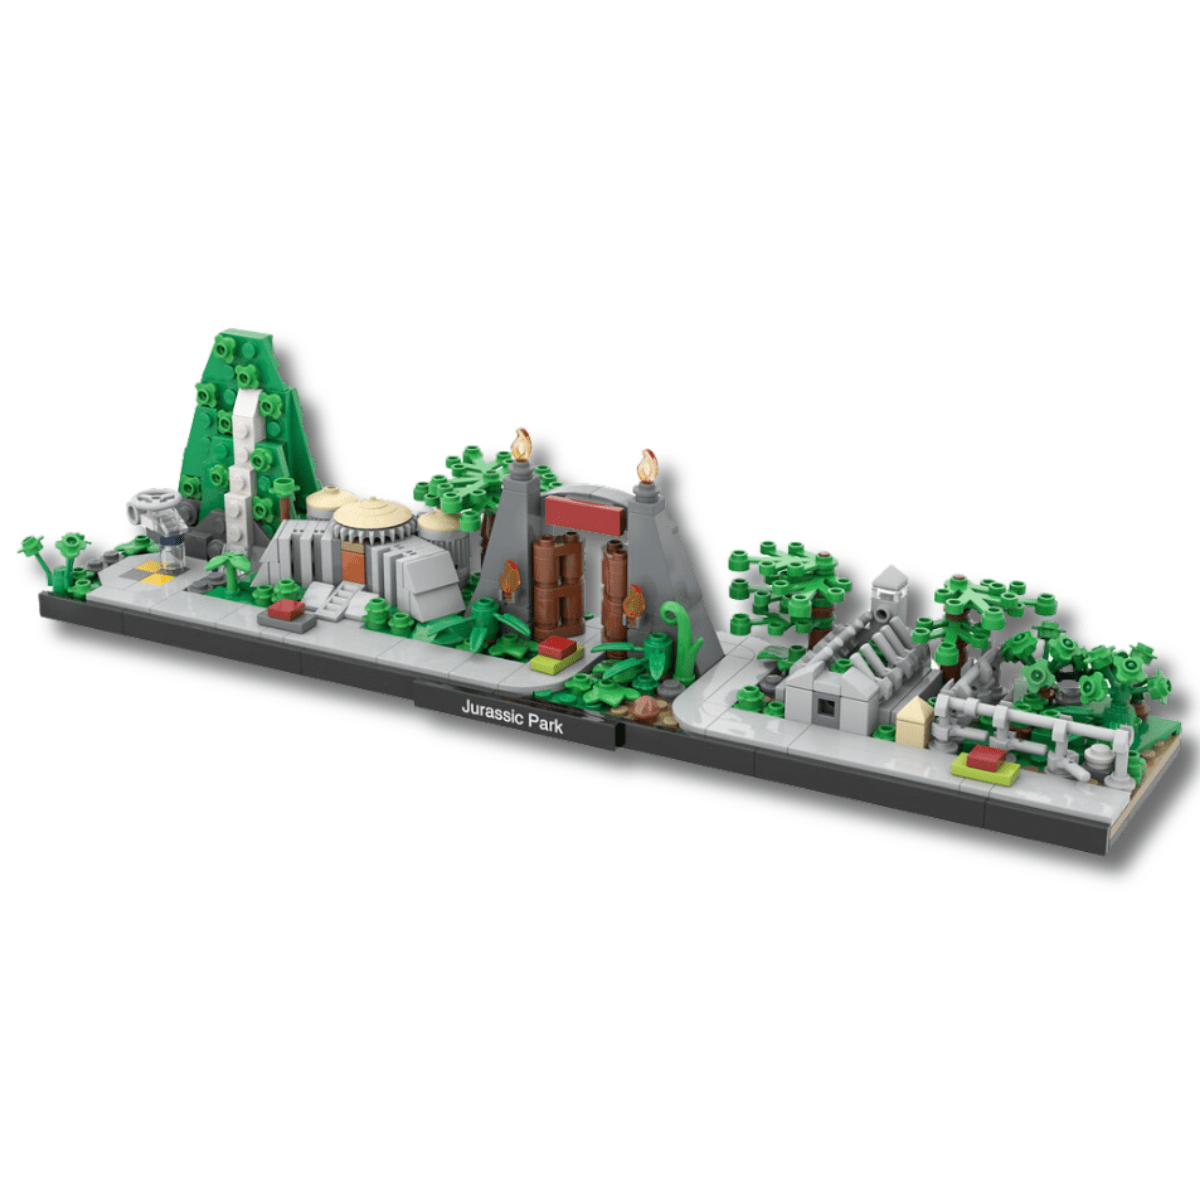 LEGO Jurassic Park Micro Scale Diorama